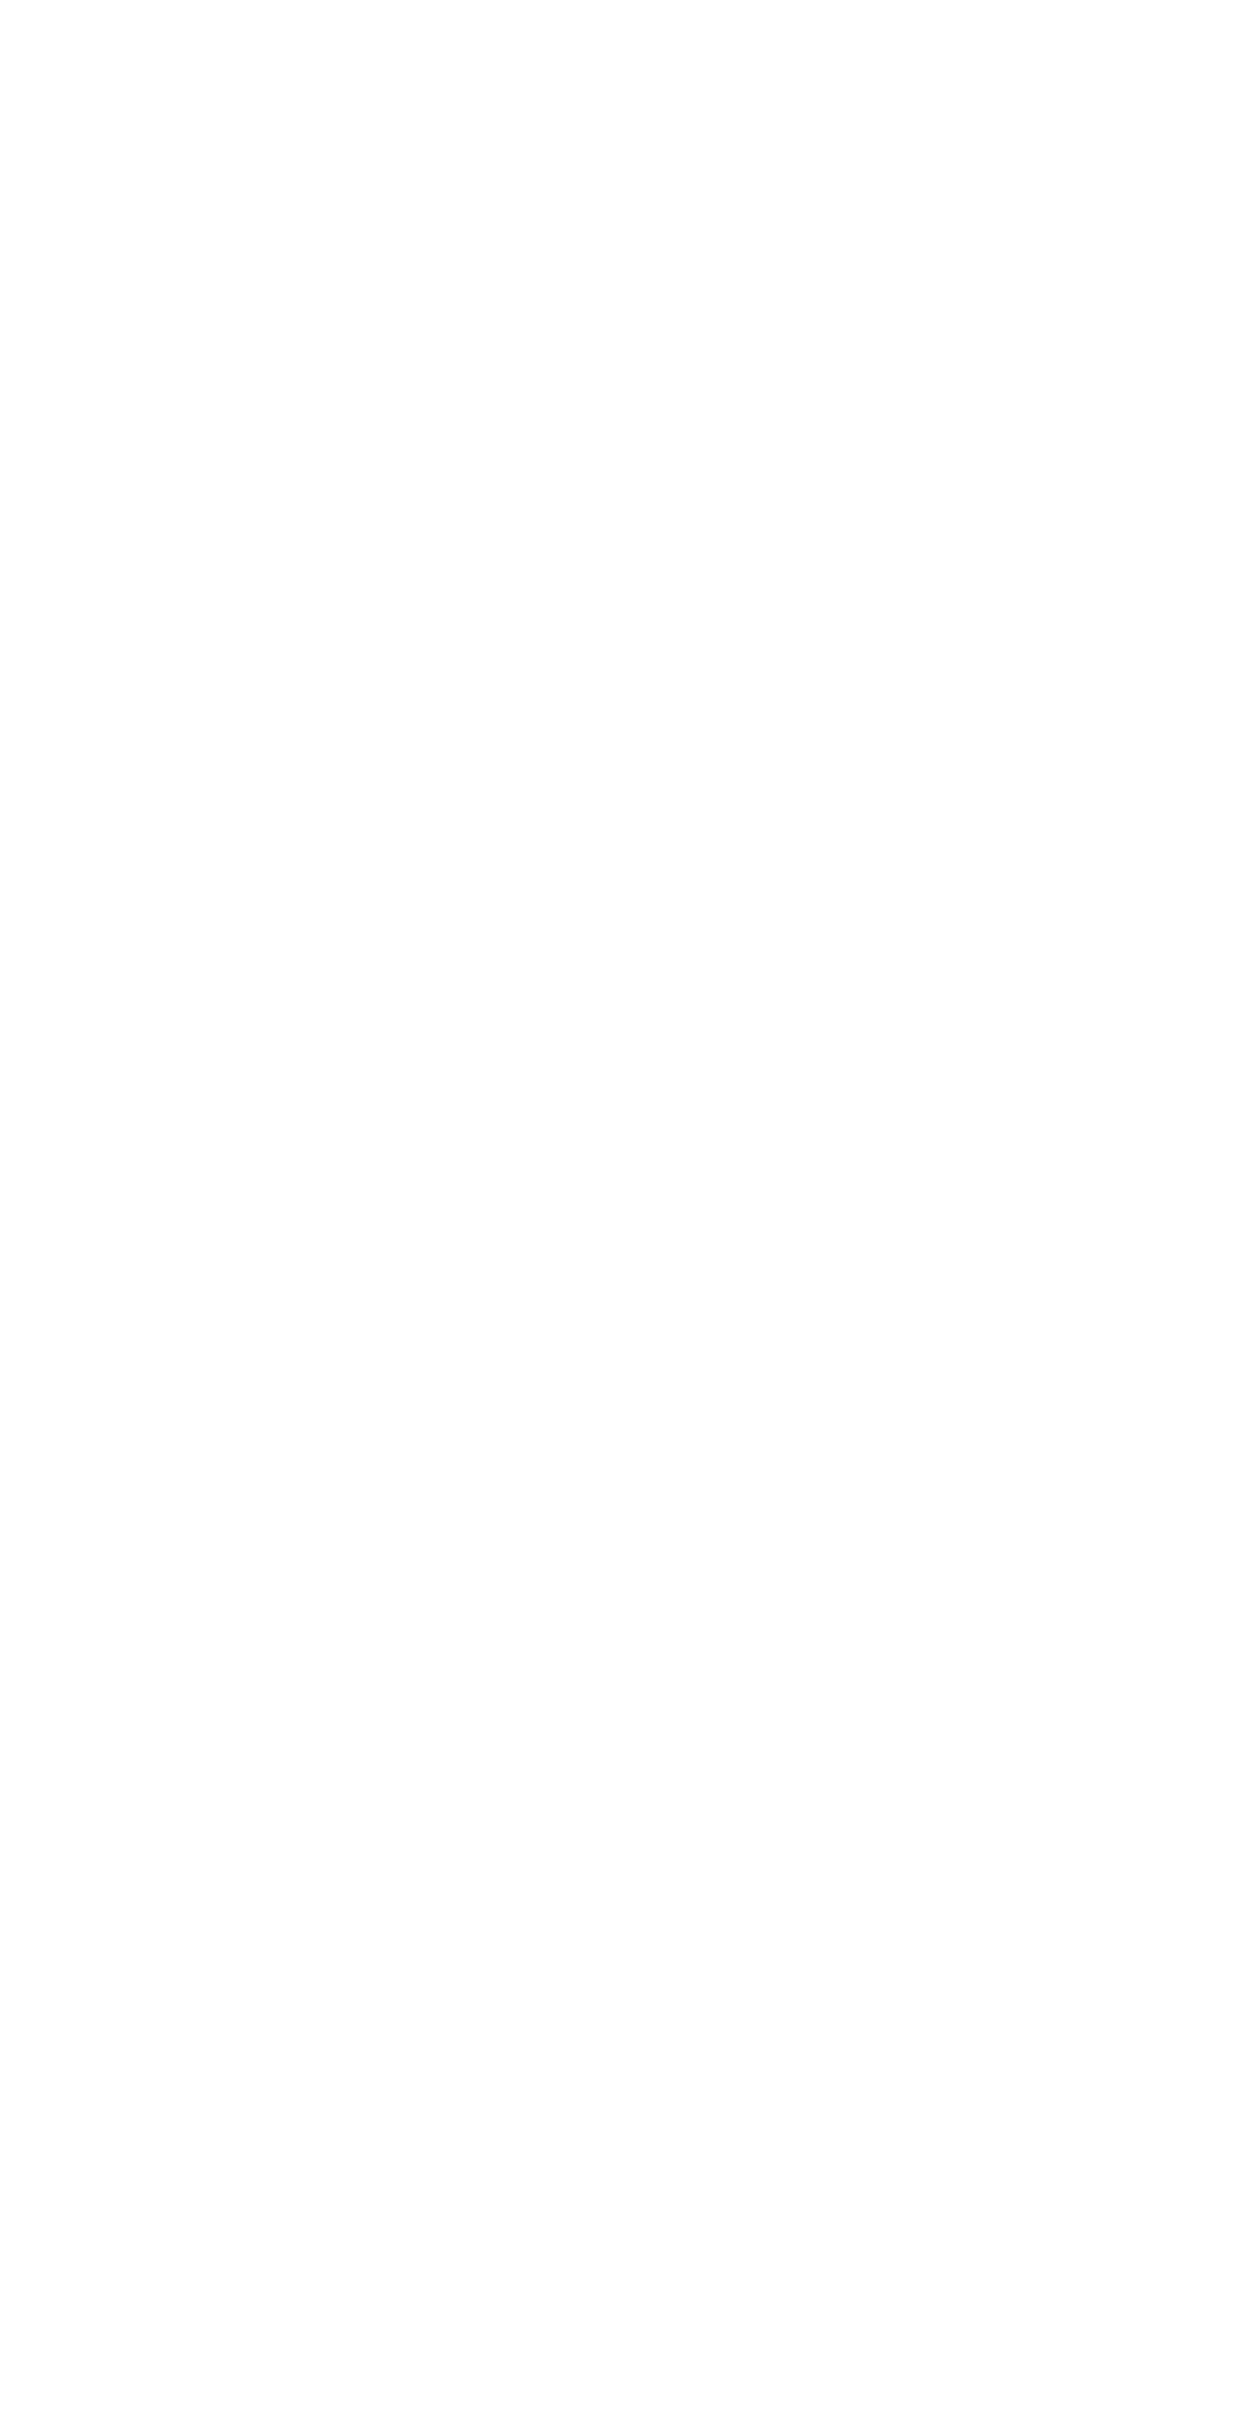 Tiong Bahru Bakery Logo.png